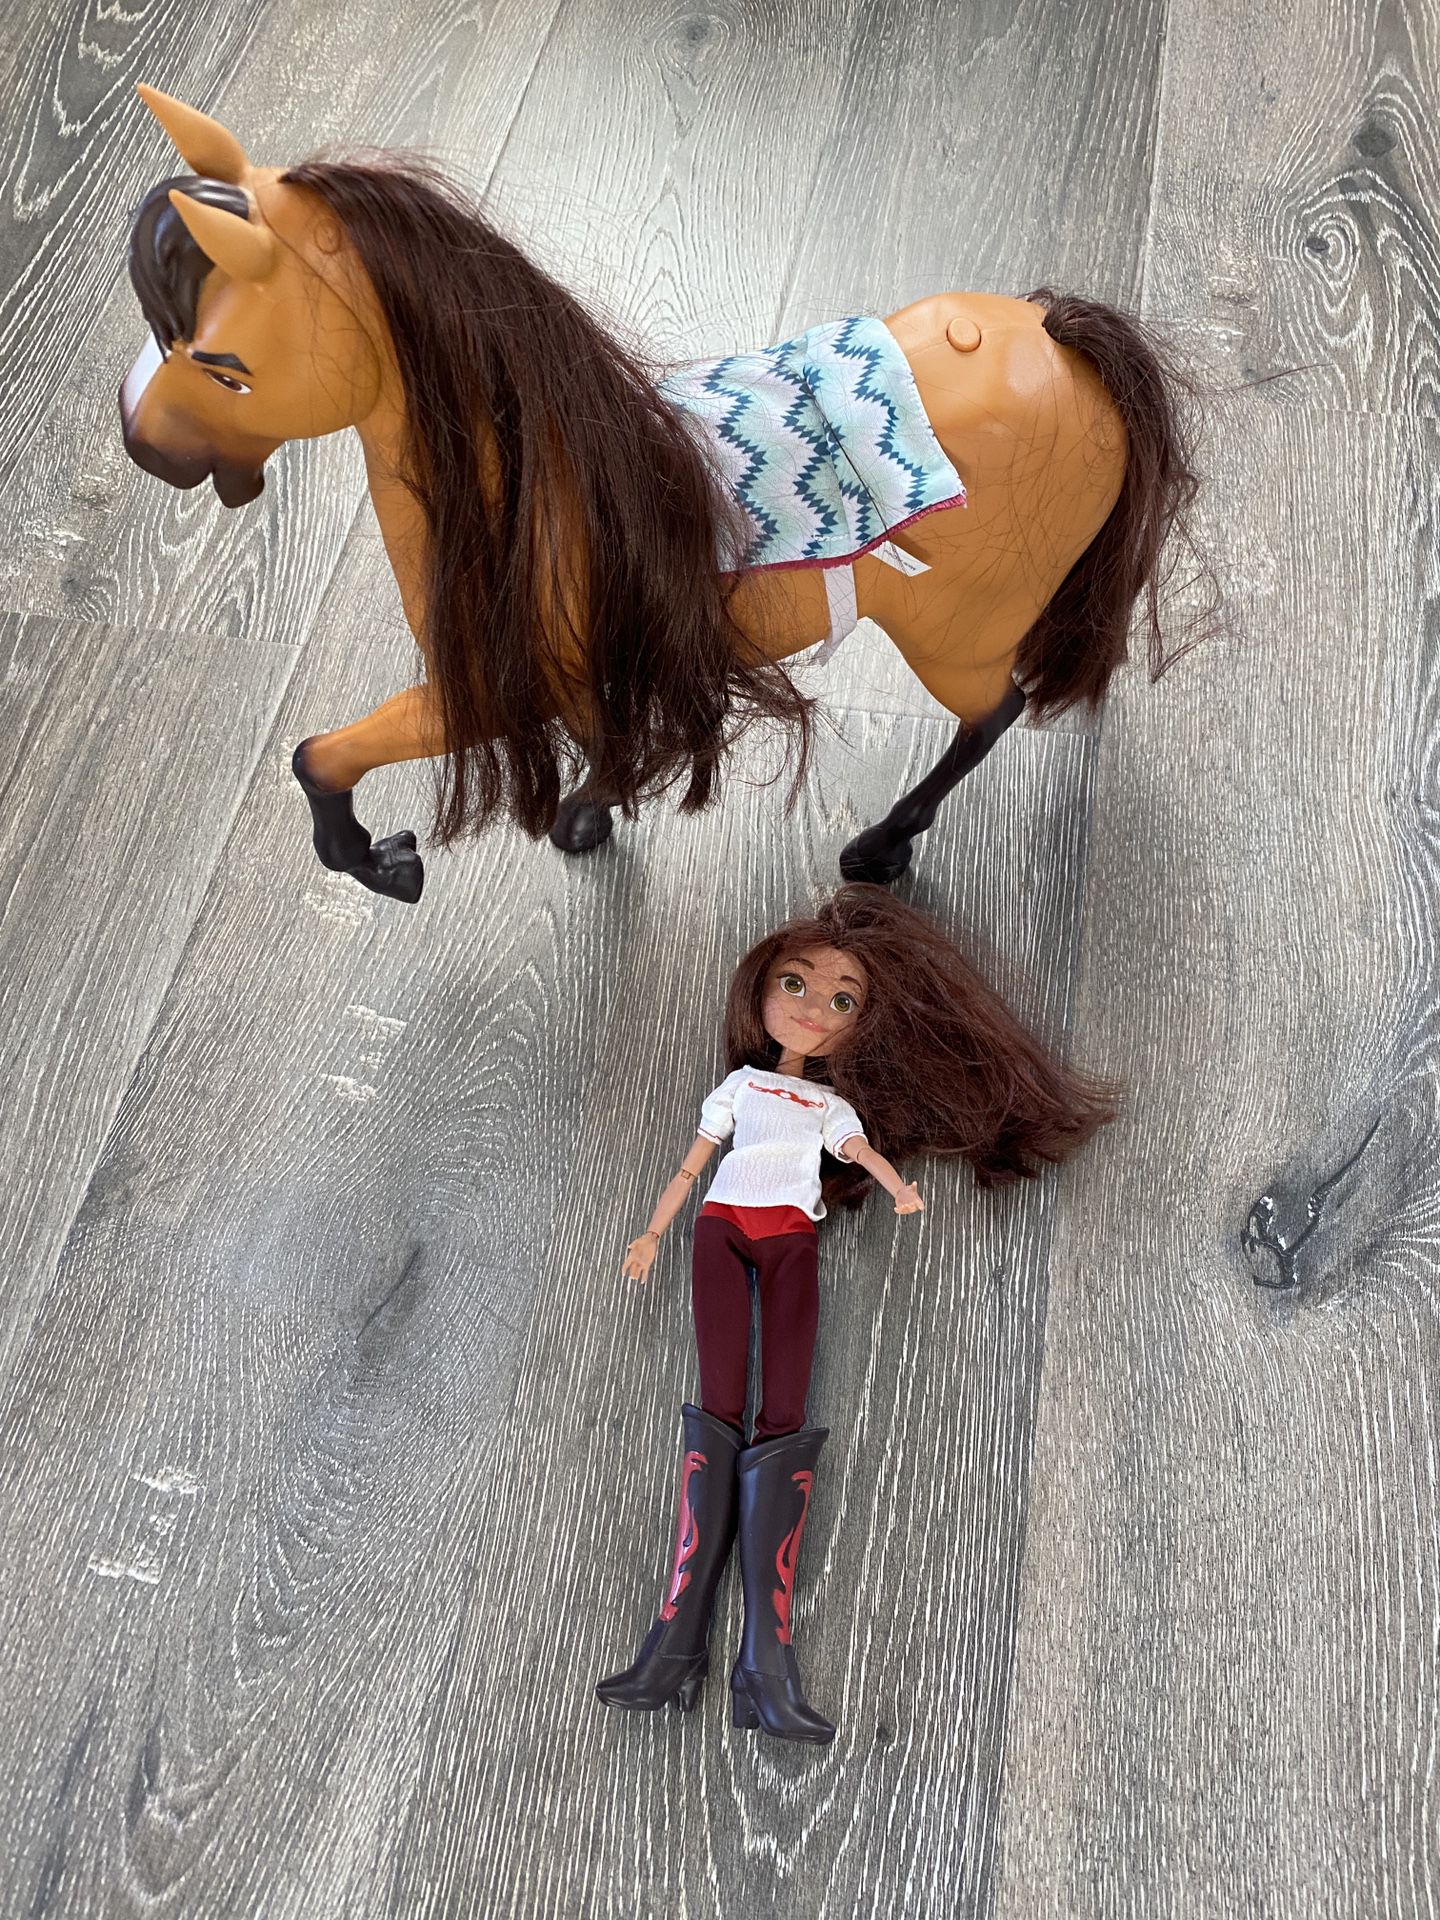 Spirit Horse Girls Toys Doll & Animated Spirit Horse.